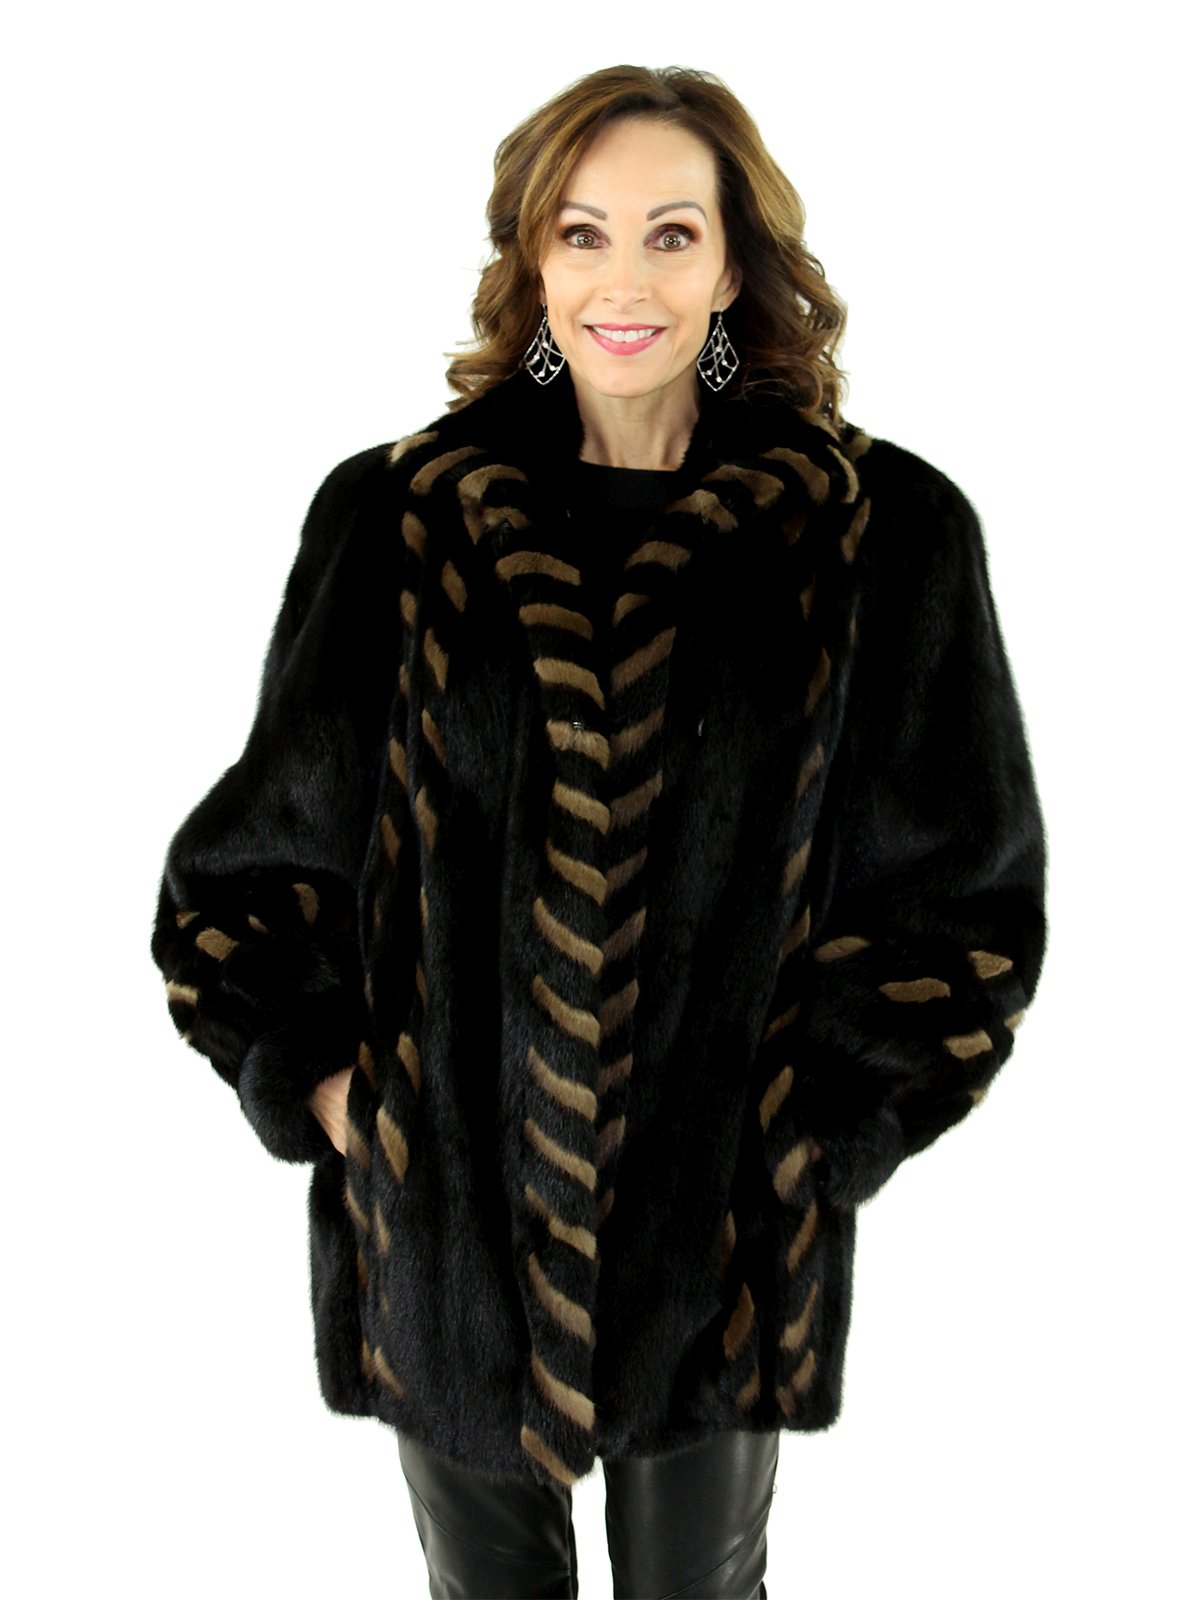 Ranch Mink Fur Jacket Reversible to Black Leather - Women's Mink Fur